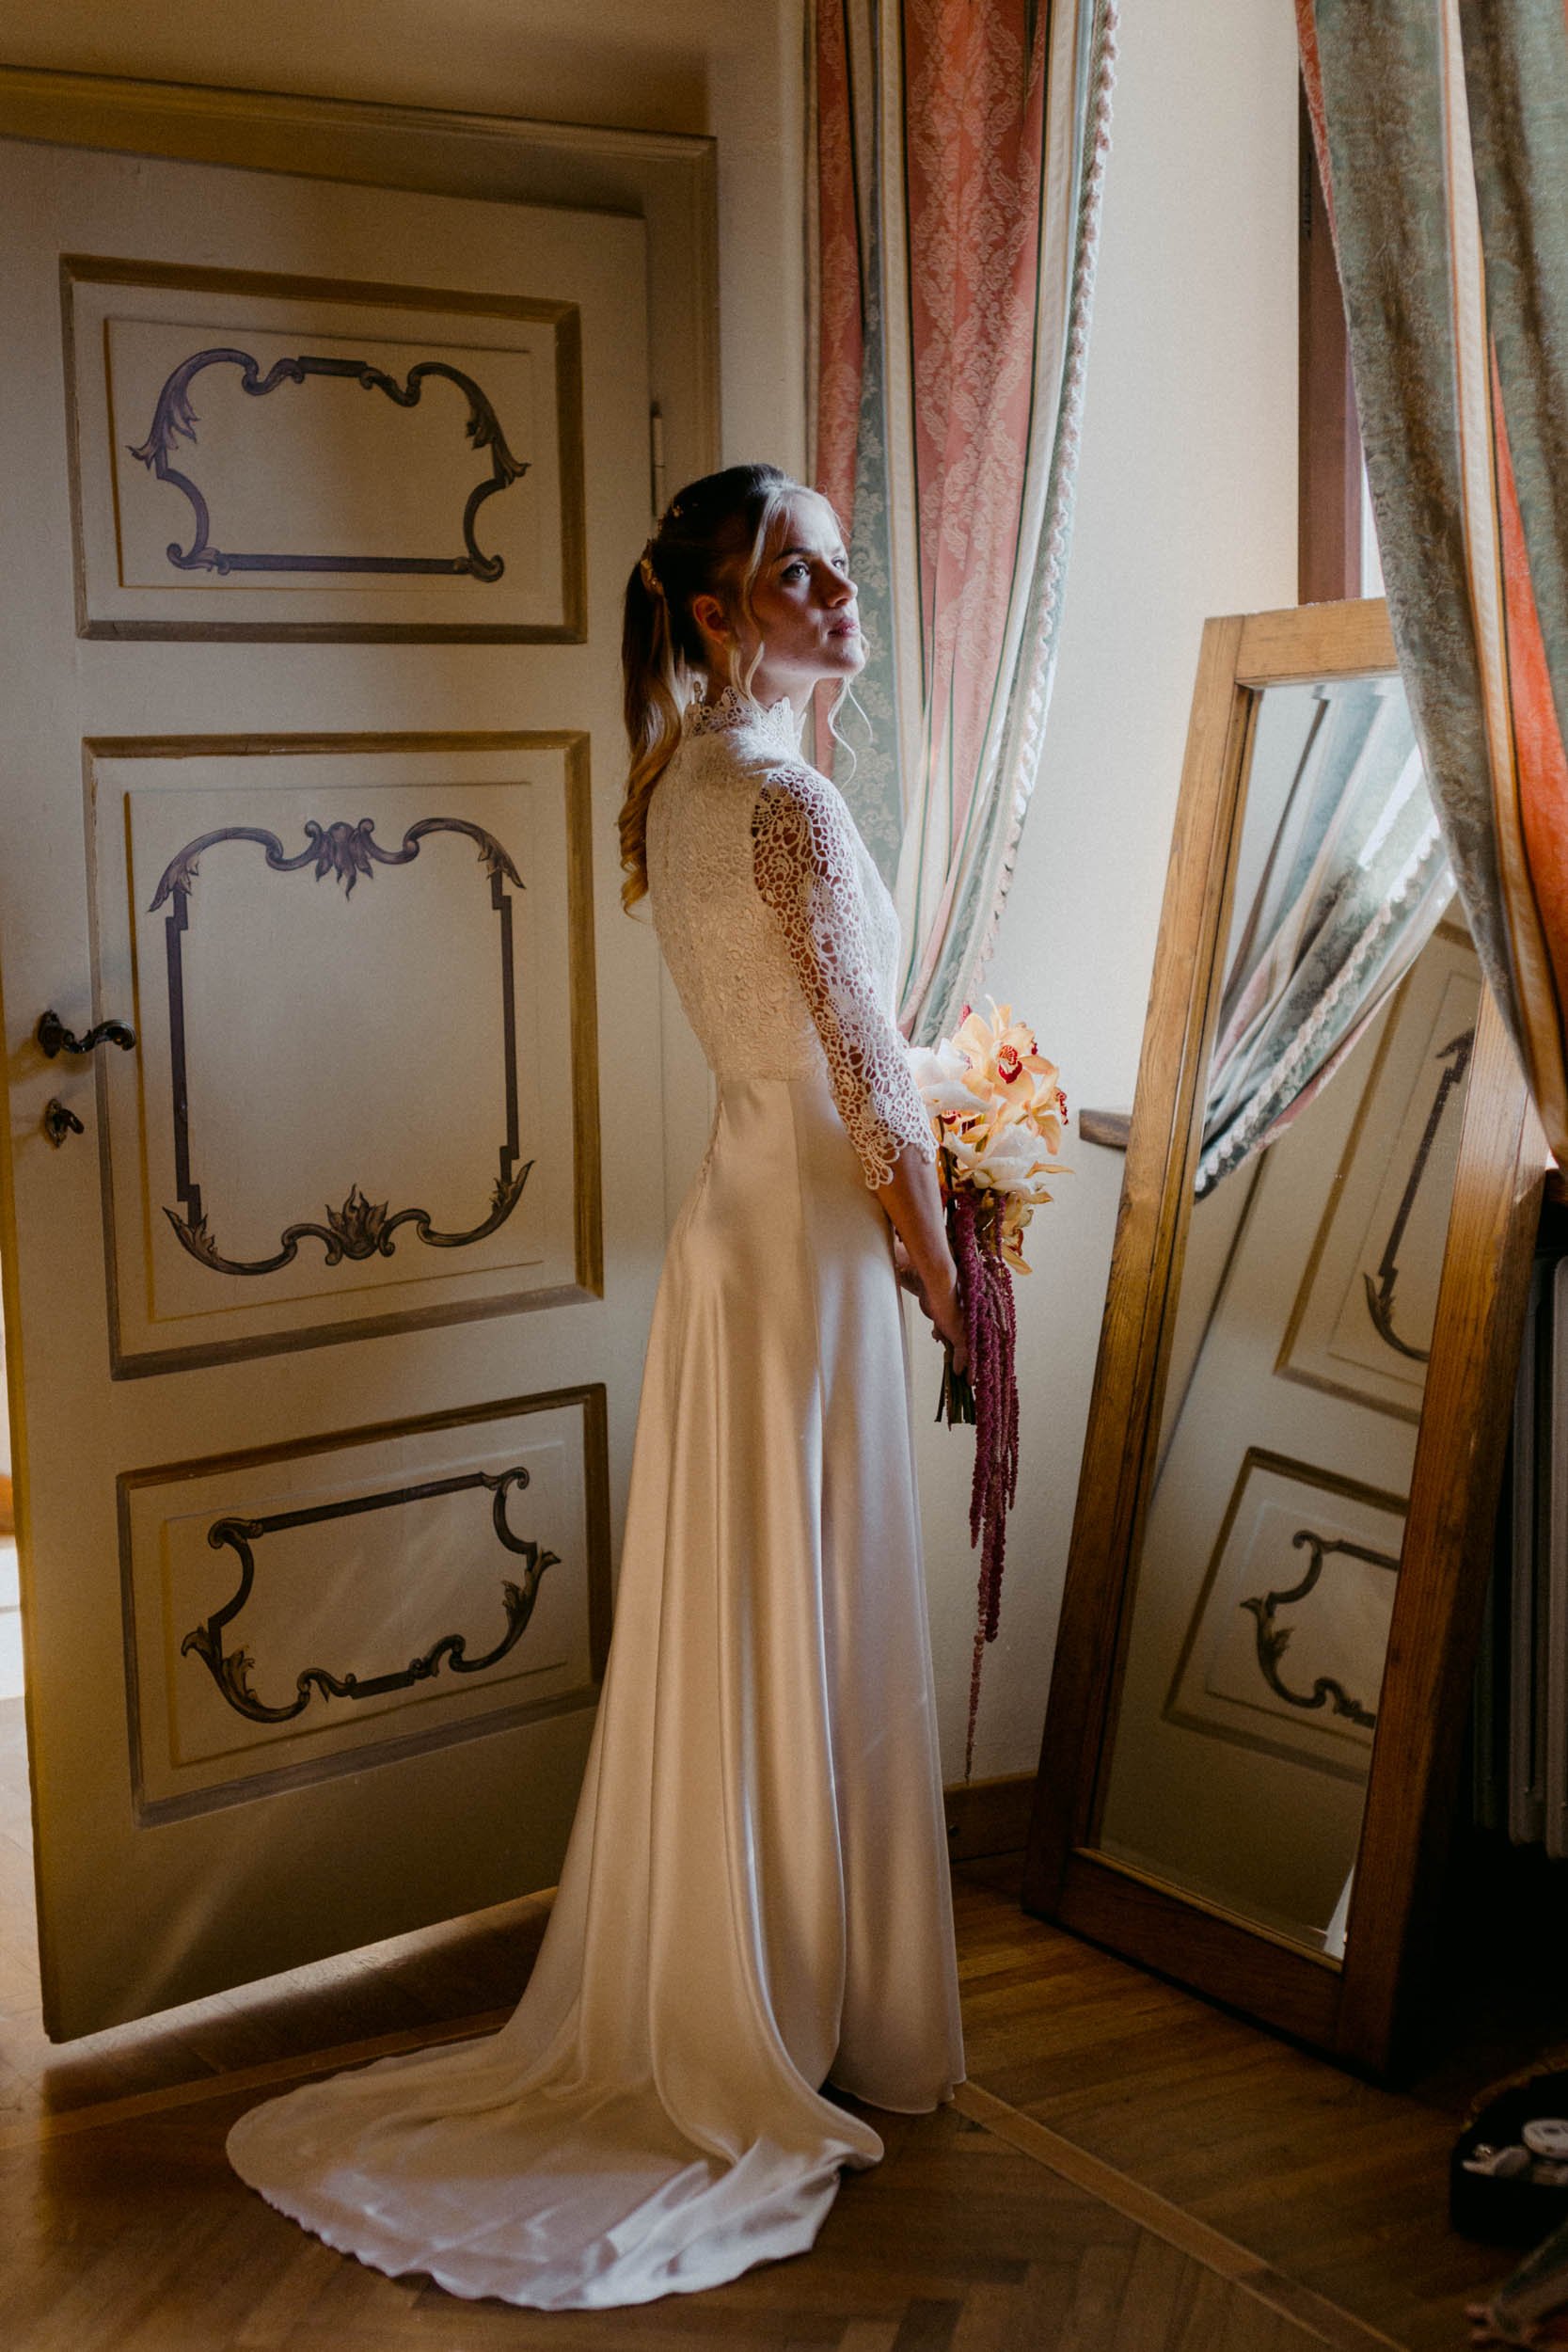 027 - Preparazione sposa - Miriam Callegari Fotografa.JPG